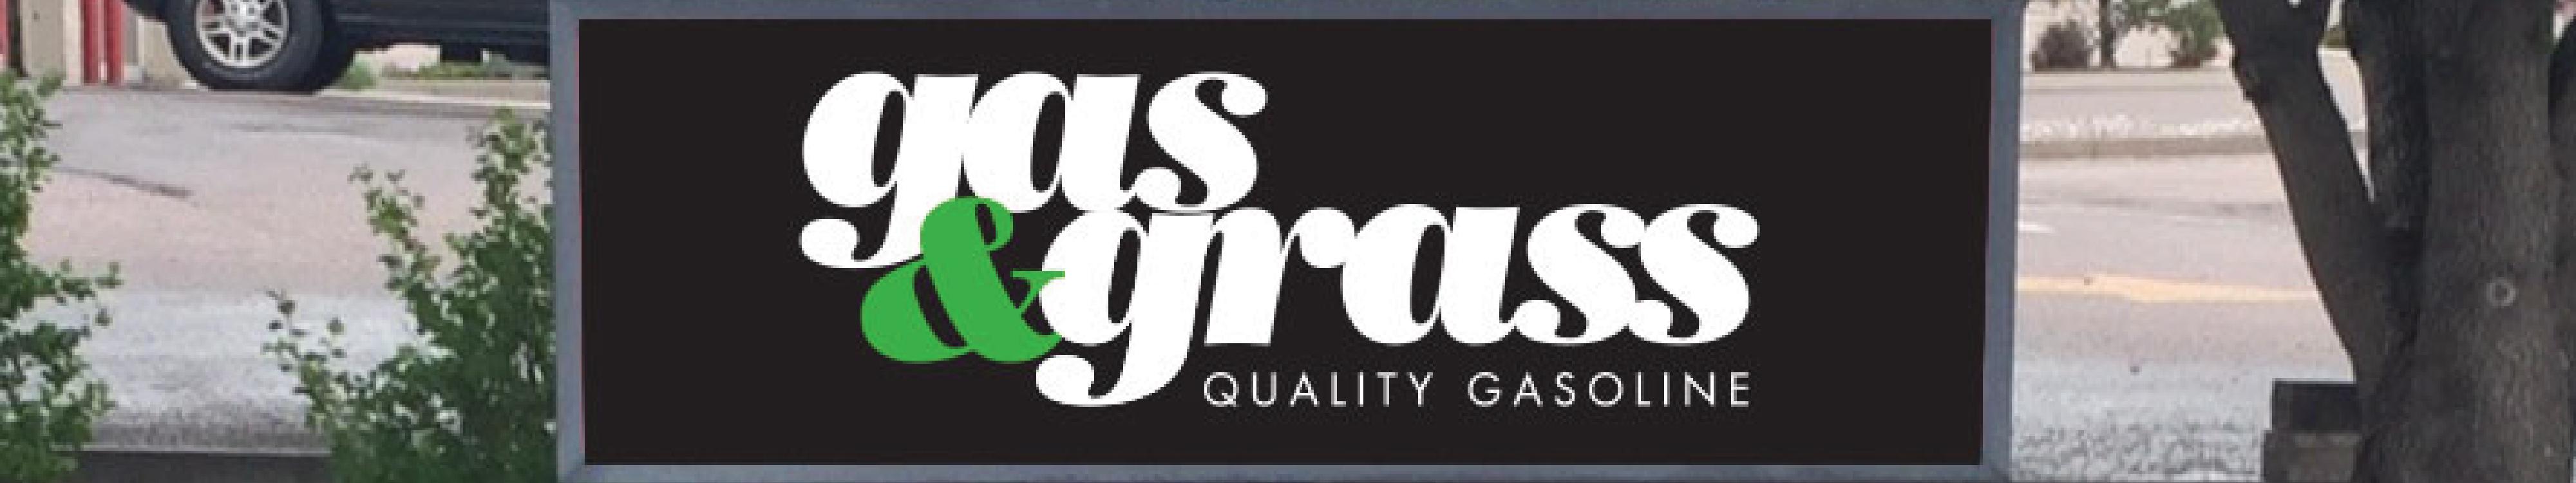 Academy Gas & Grassstore image